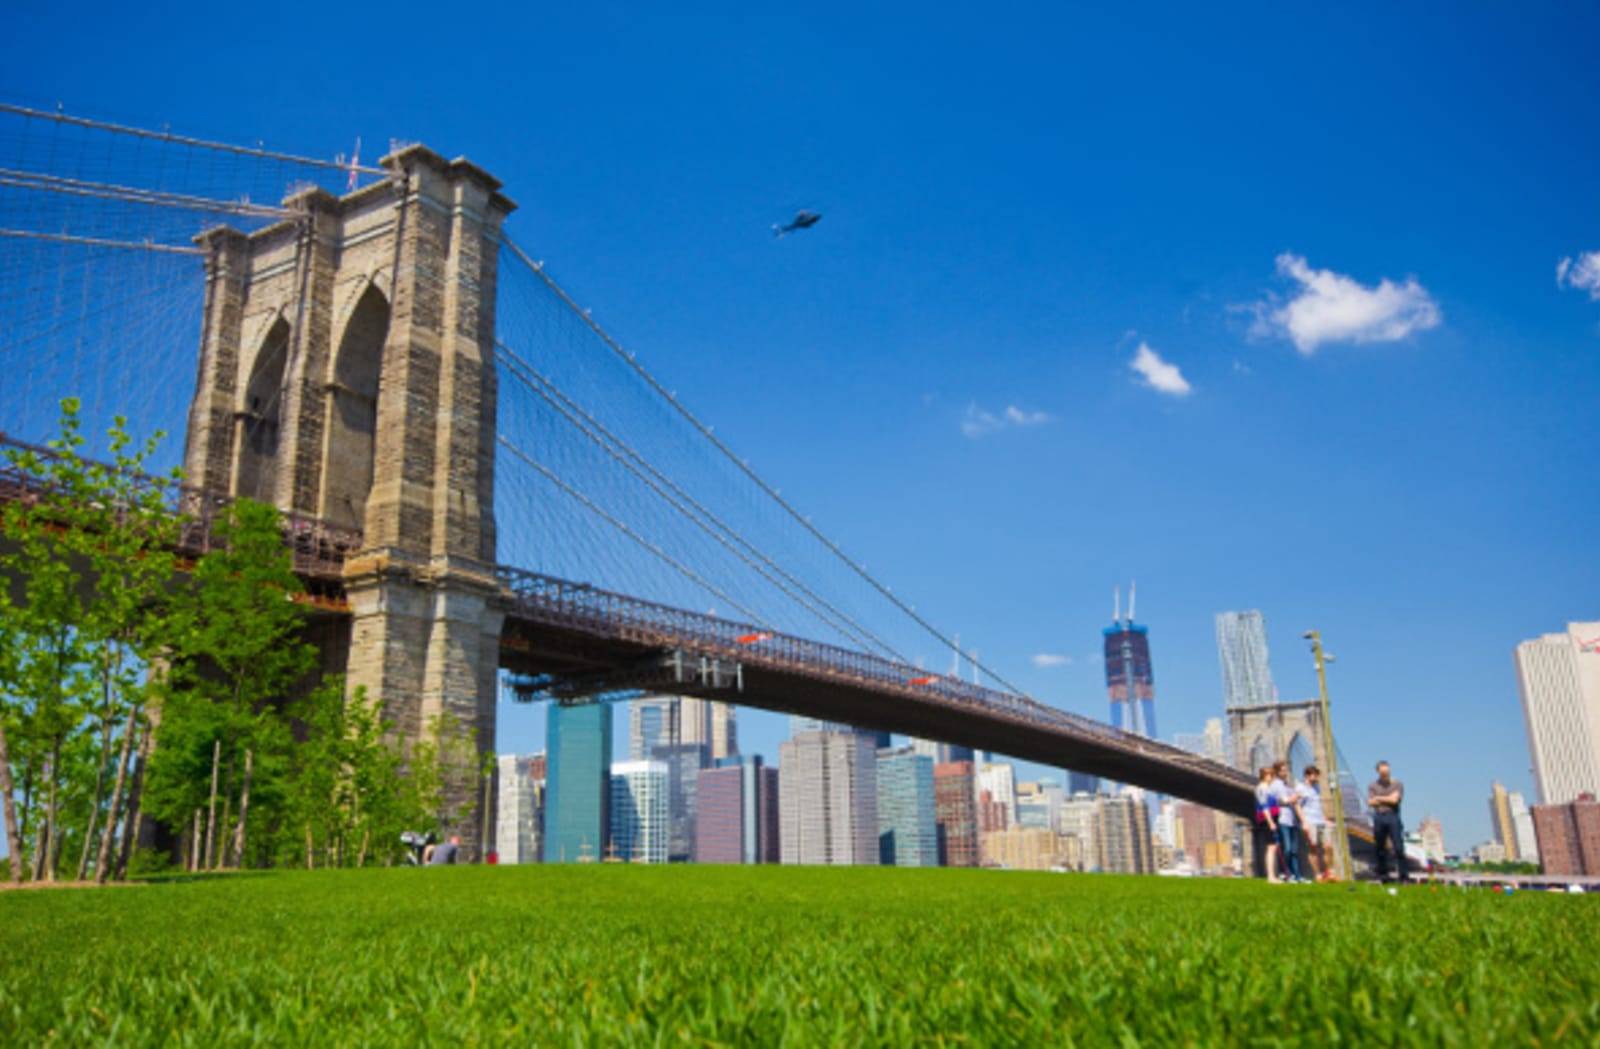 Daytime shot of the Brooklyn Bridge